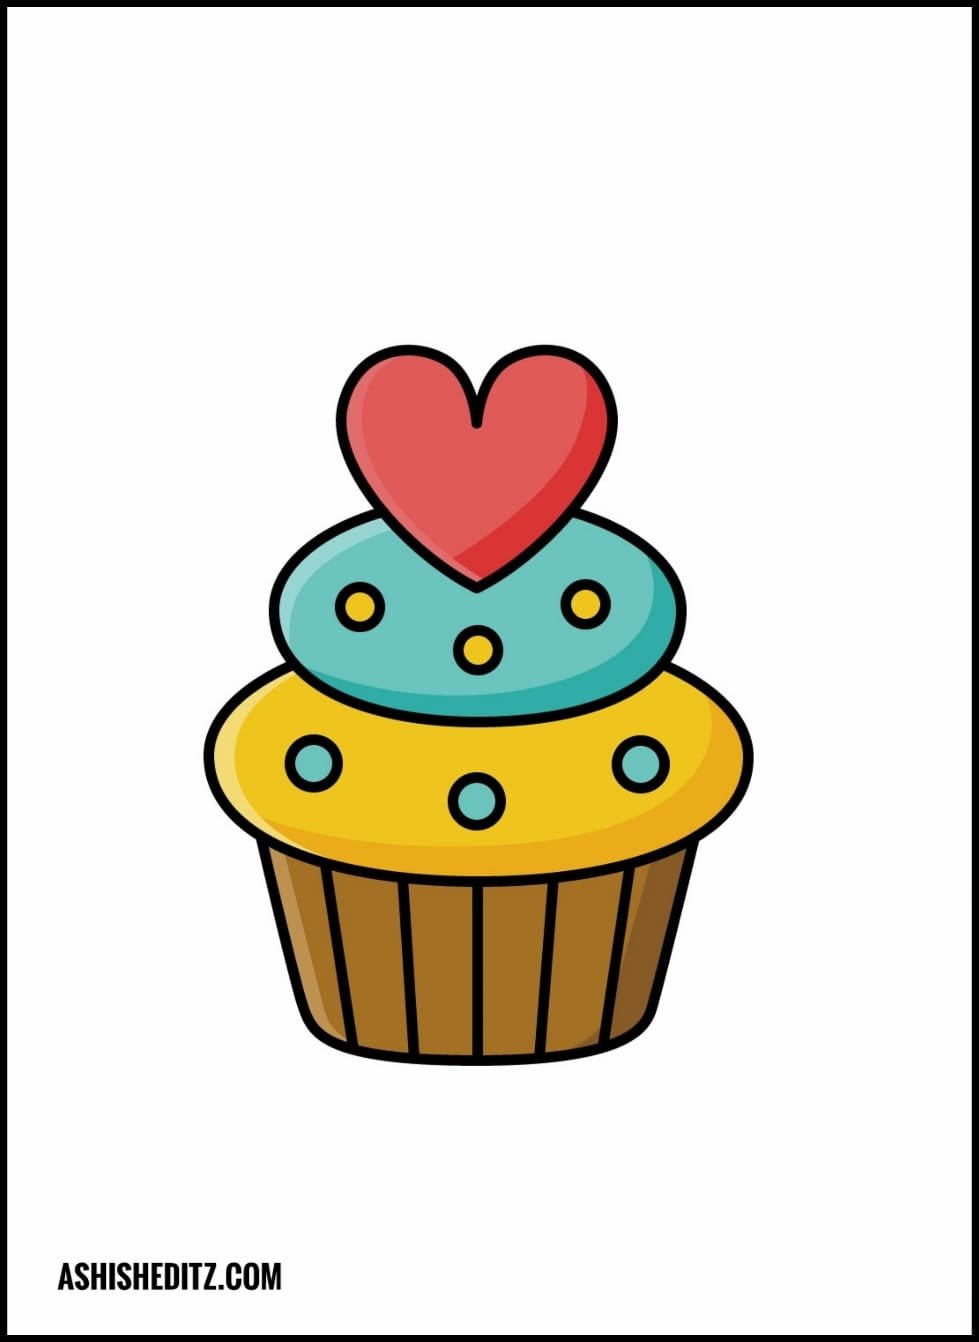 Premium Vector | Cute cake mascot character